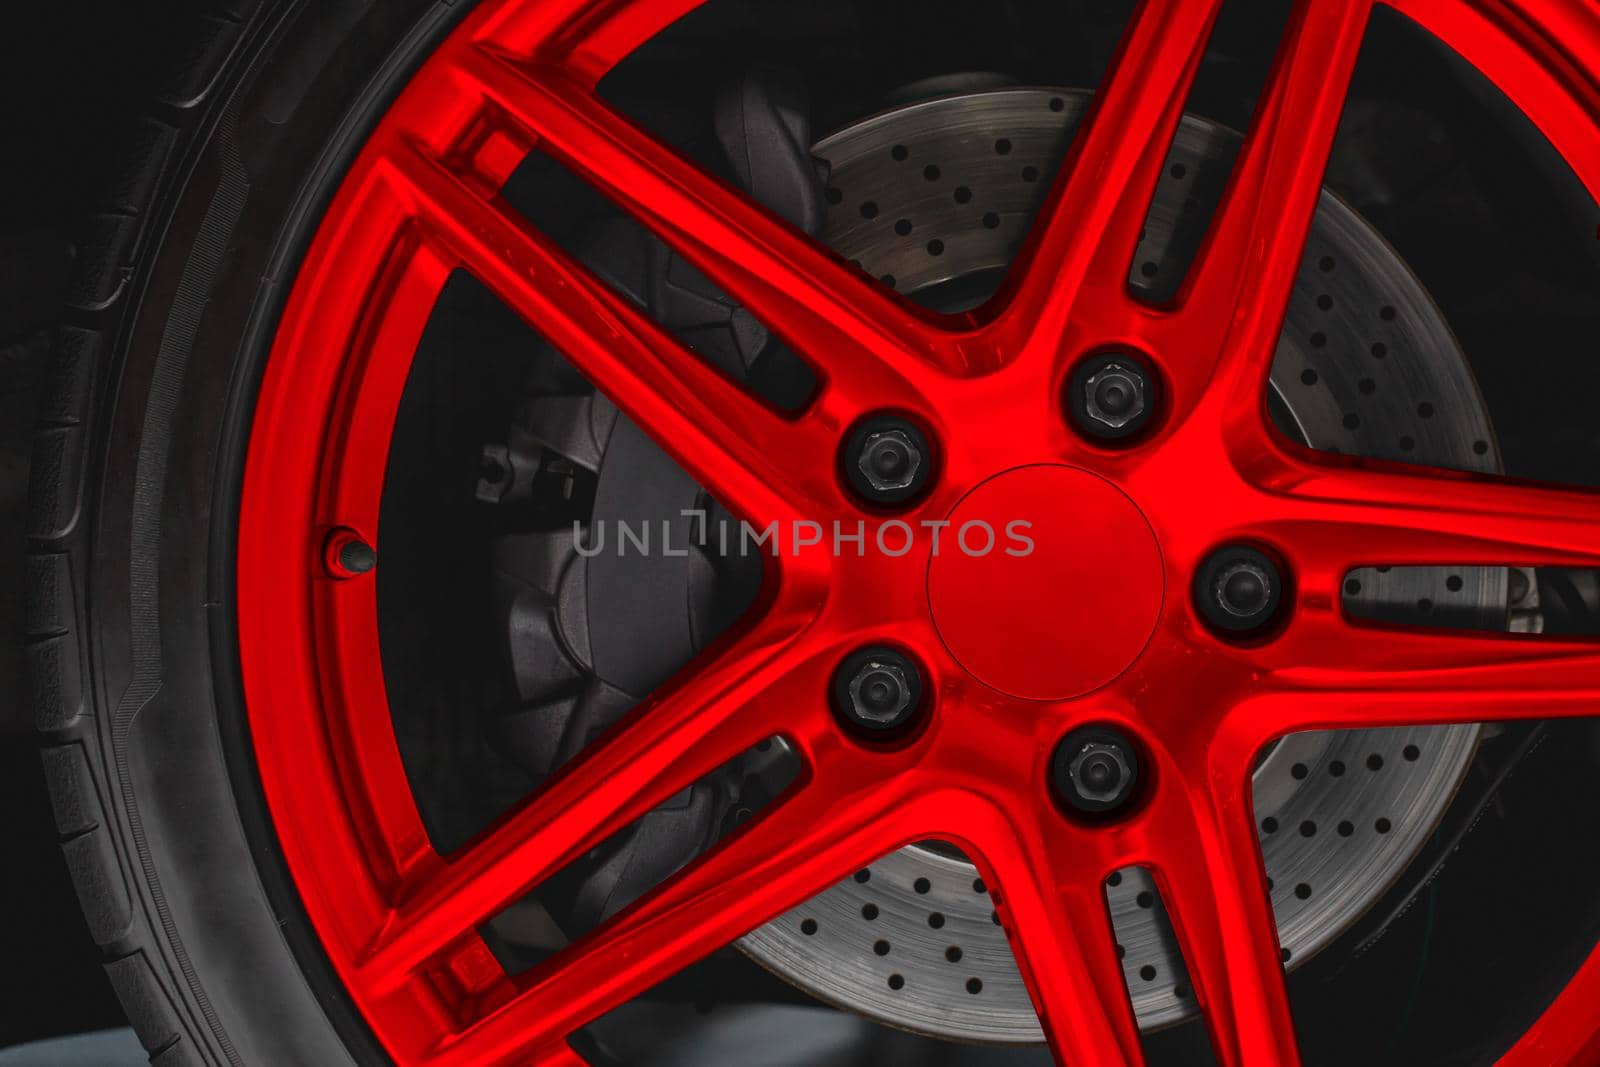 Alloy wheel Rim or Mag disc brake caliper in Super car high performance auto part by qualitystocks